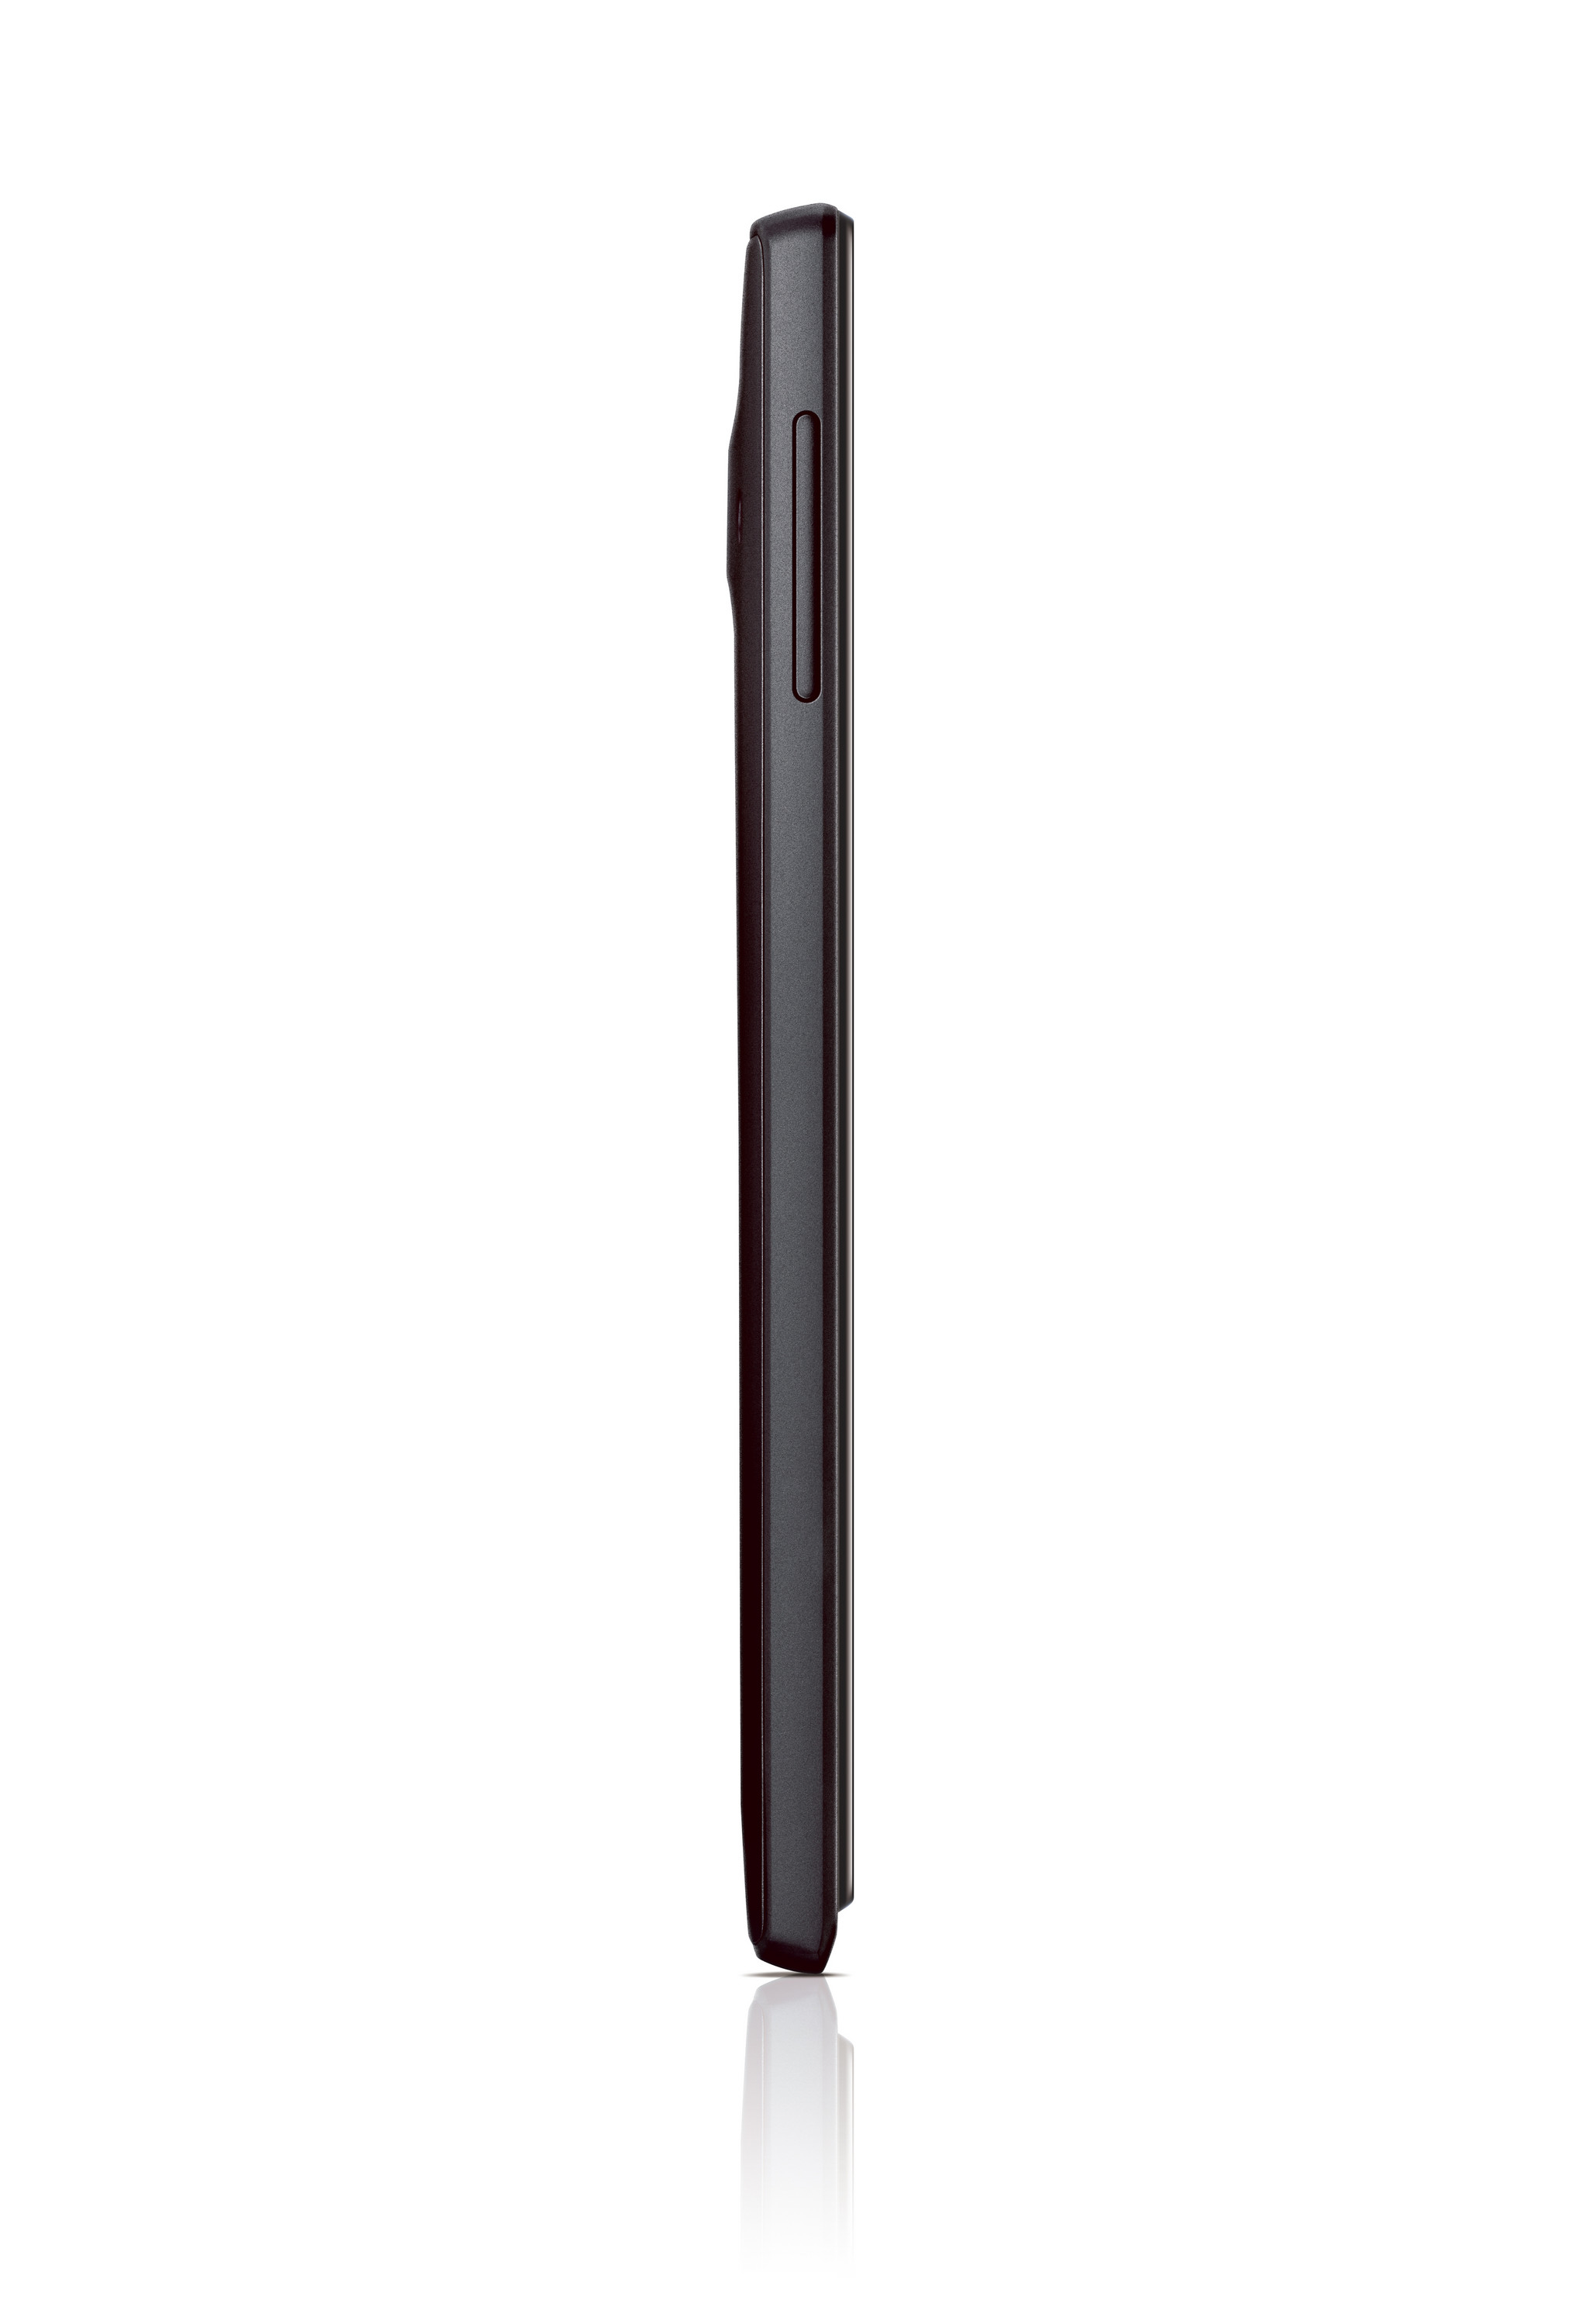 Huawei-W1(black)-photography-left-20121225.jpg